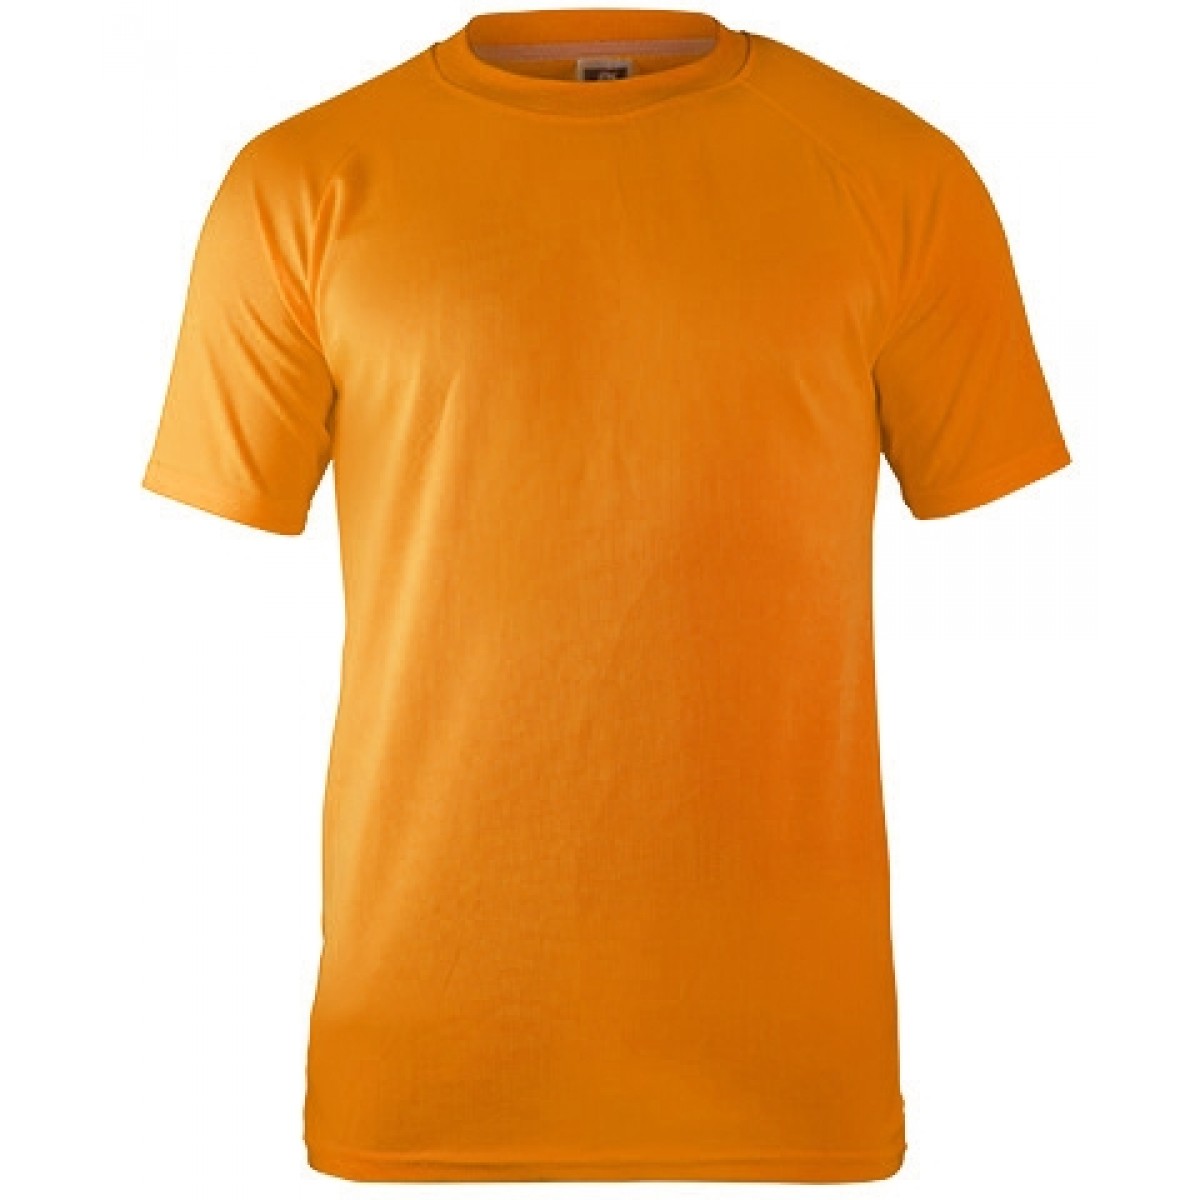 Short Sleeves Mesh Performance T-shirt-Neon Orange -S